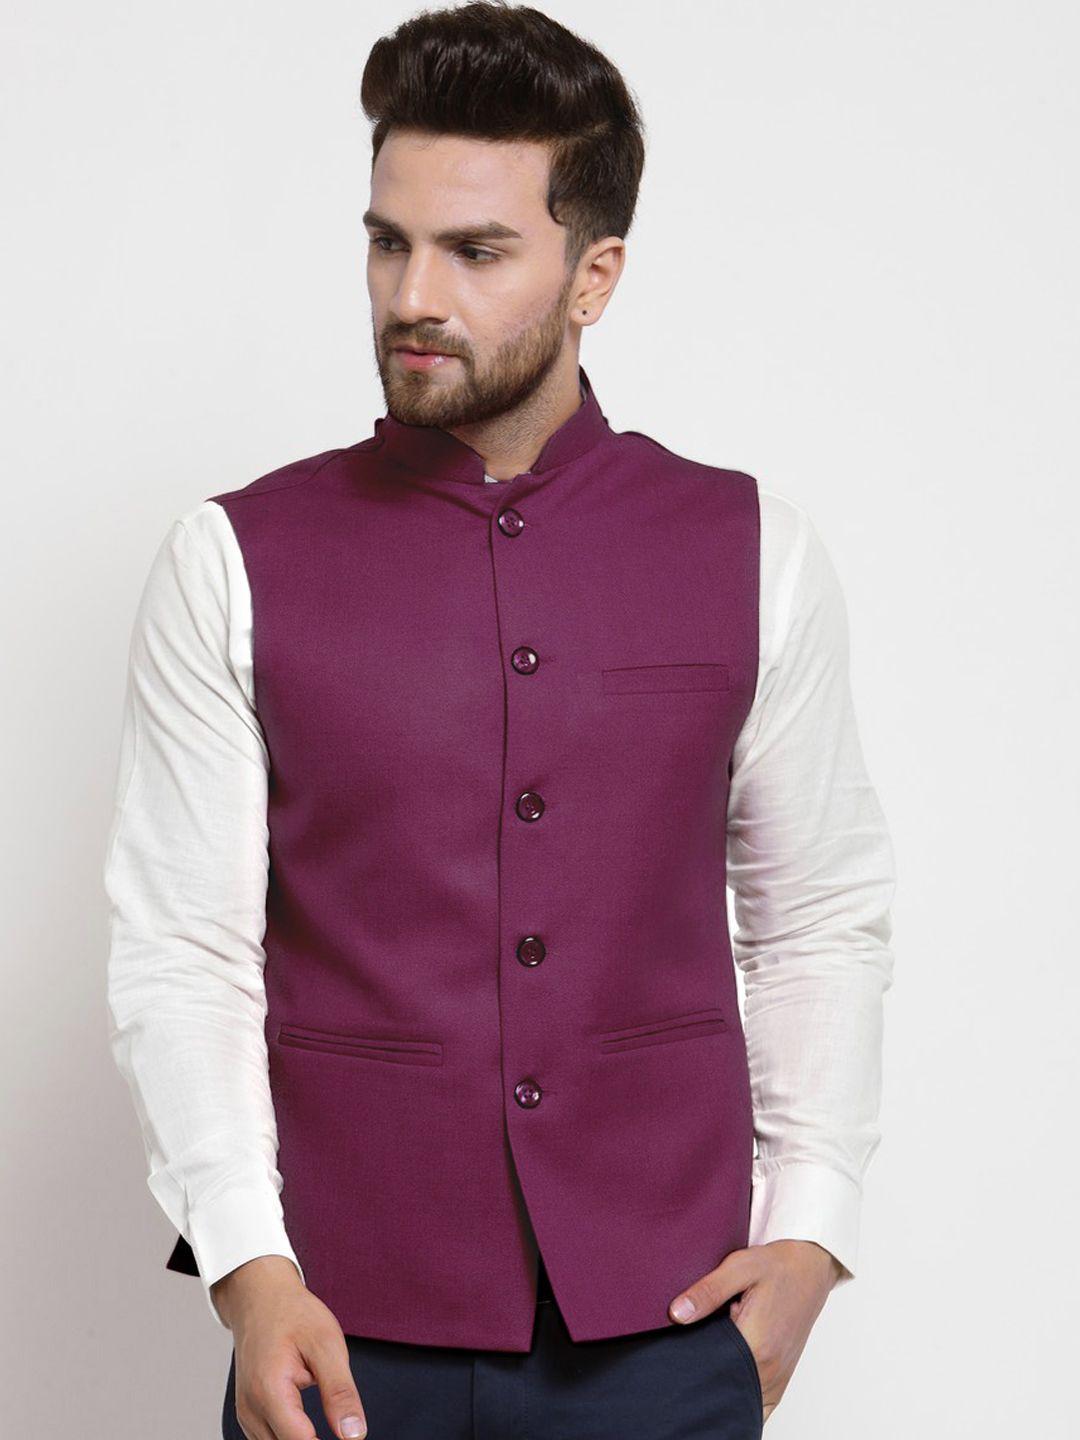 treemoda-men-purple-solid-woven-nehru-jackets